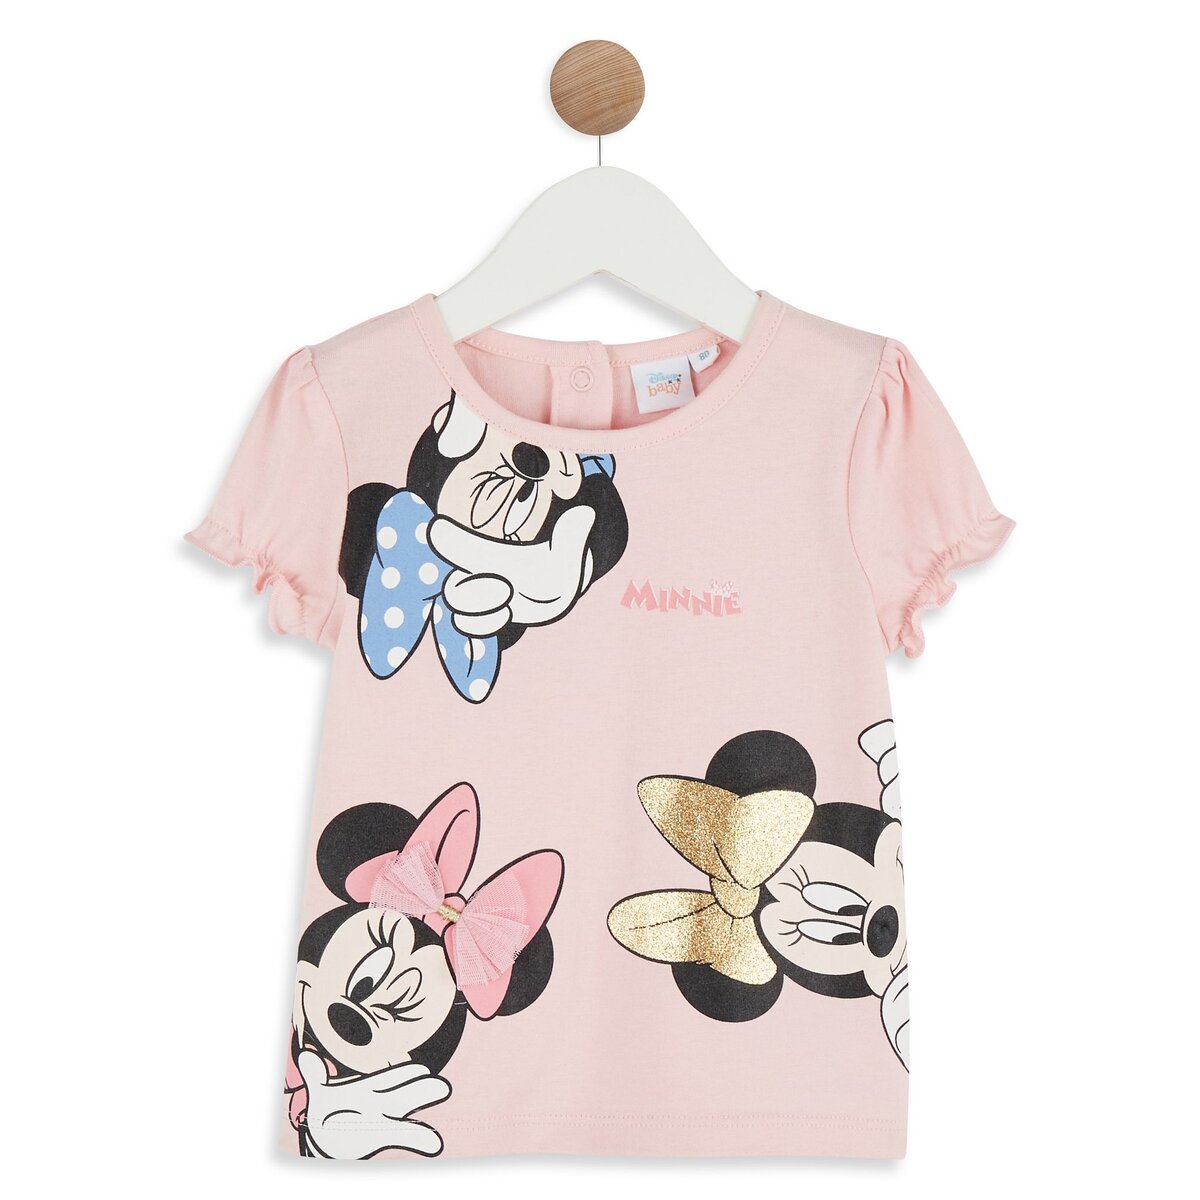 INEXTENSO T-shirt manches courtes rose bébé fille Minnie